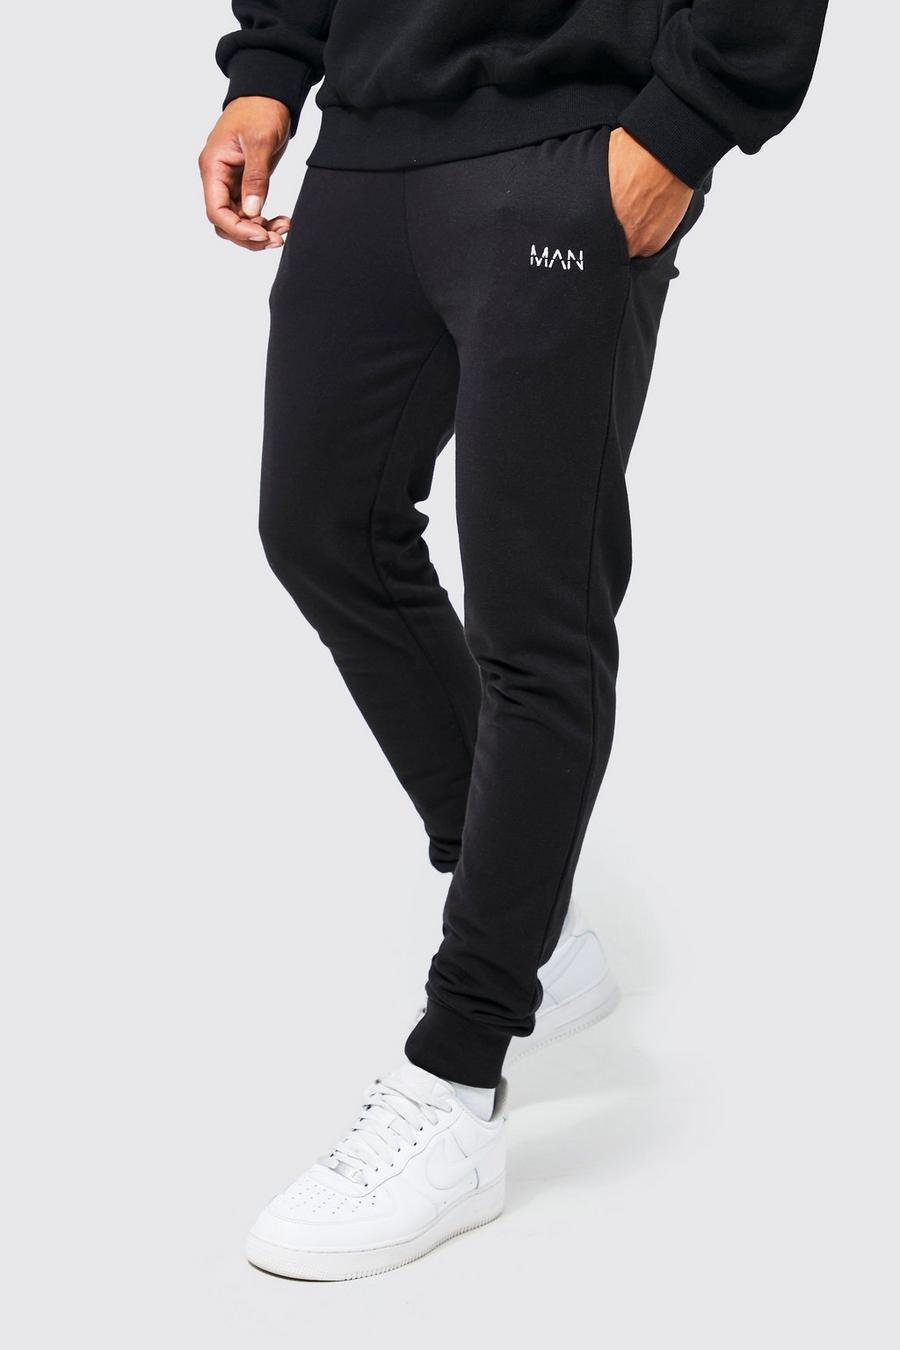 Pantaloni tuta Original Man Super Skinny Fit, Black nero